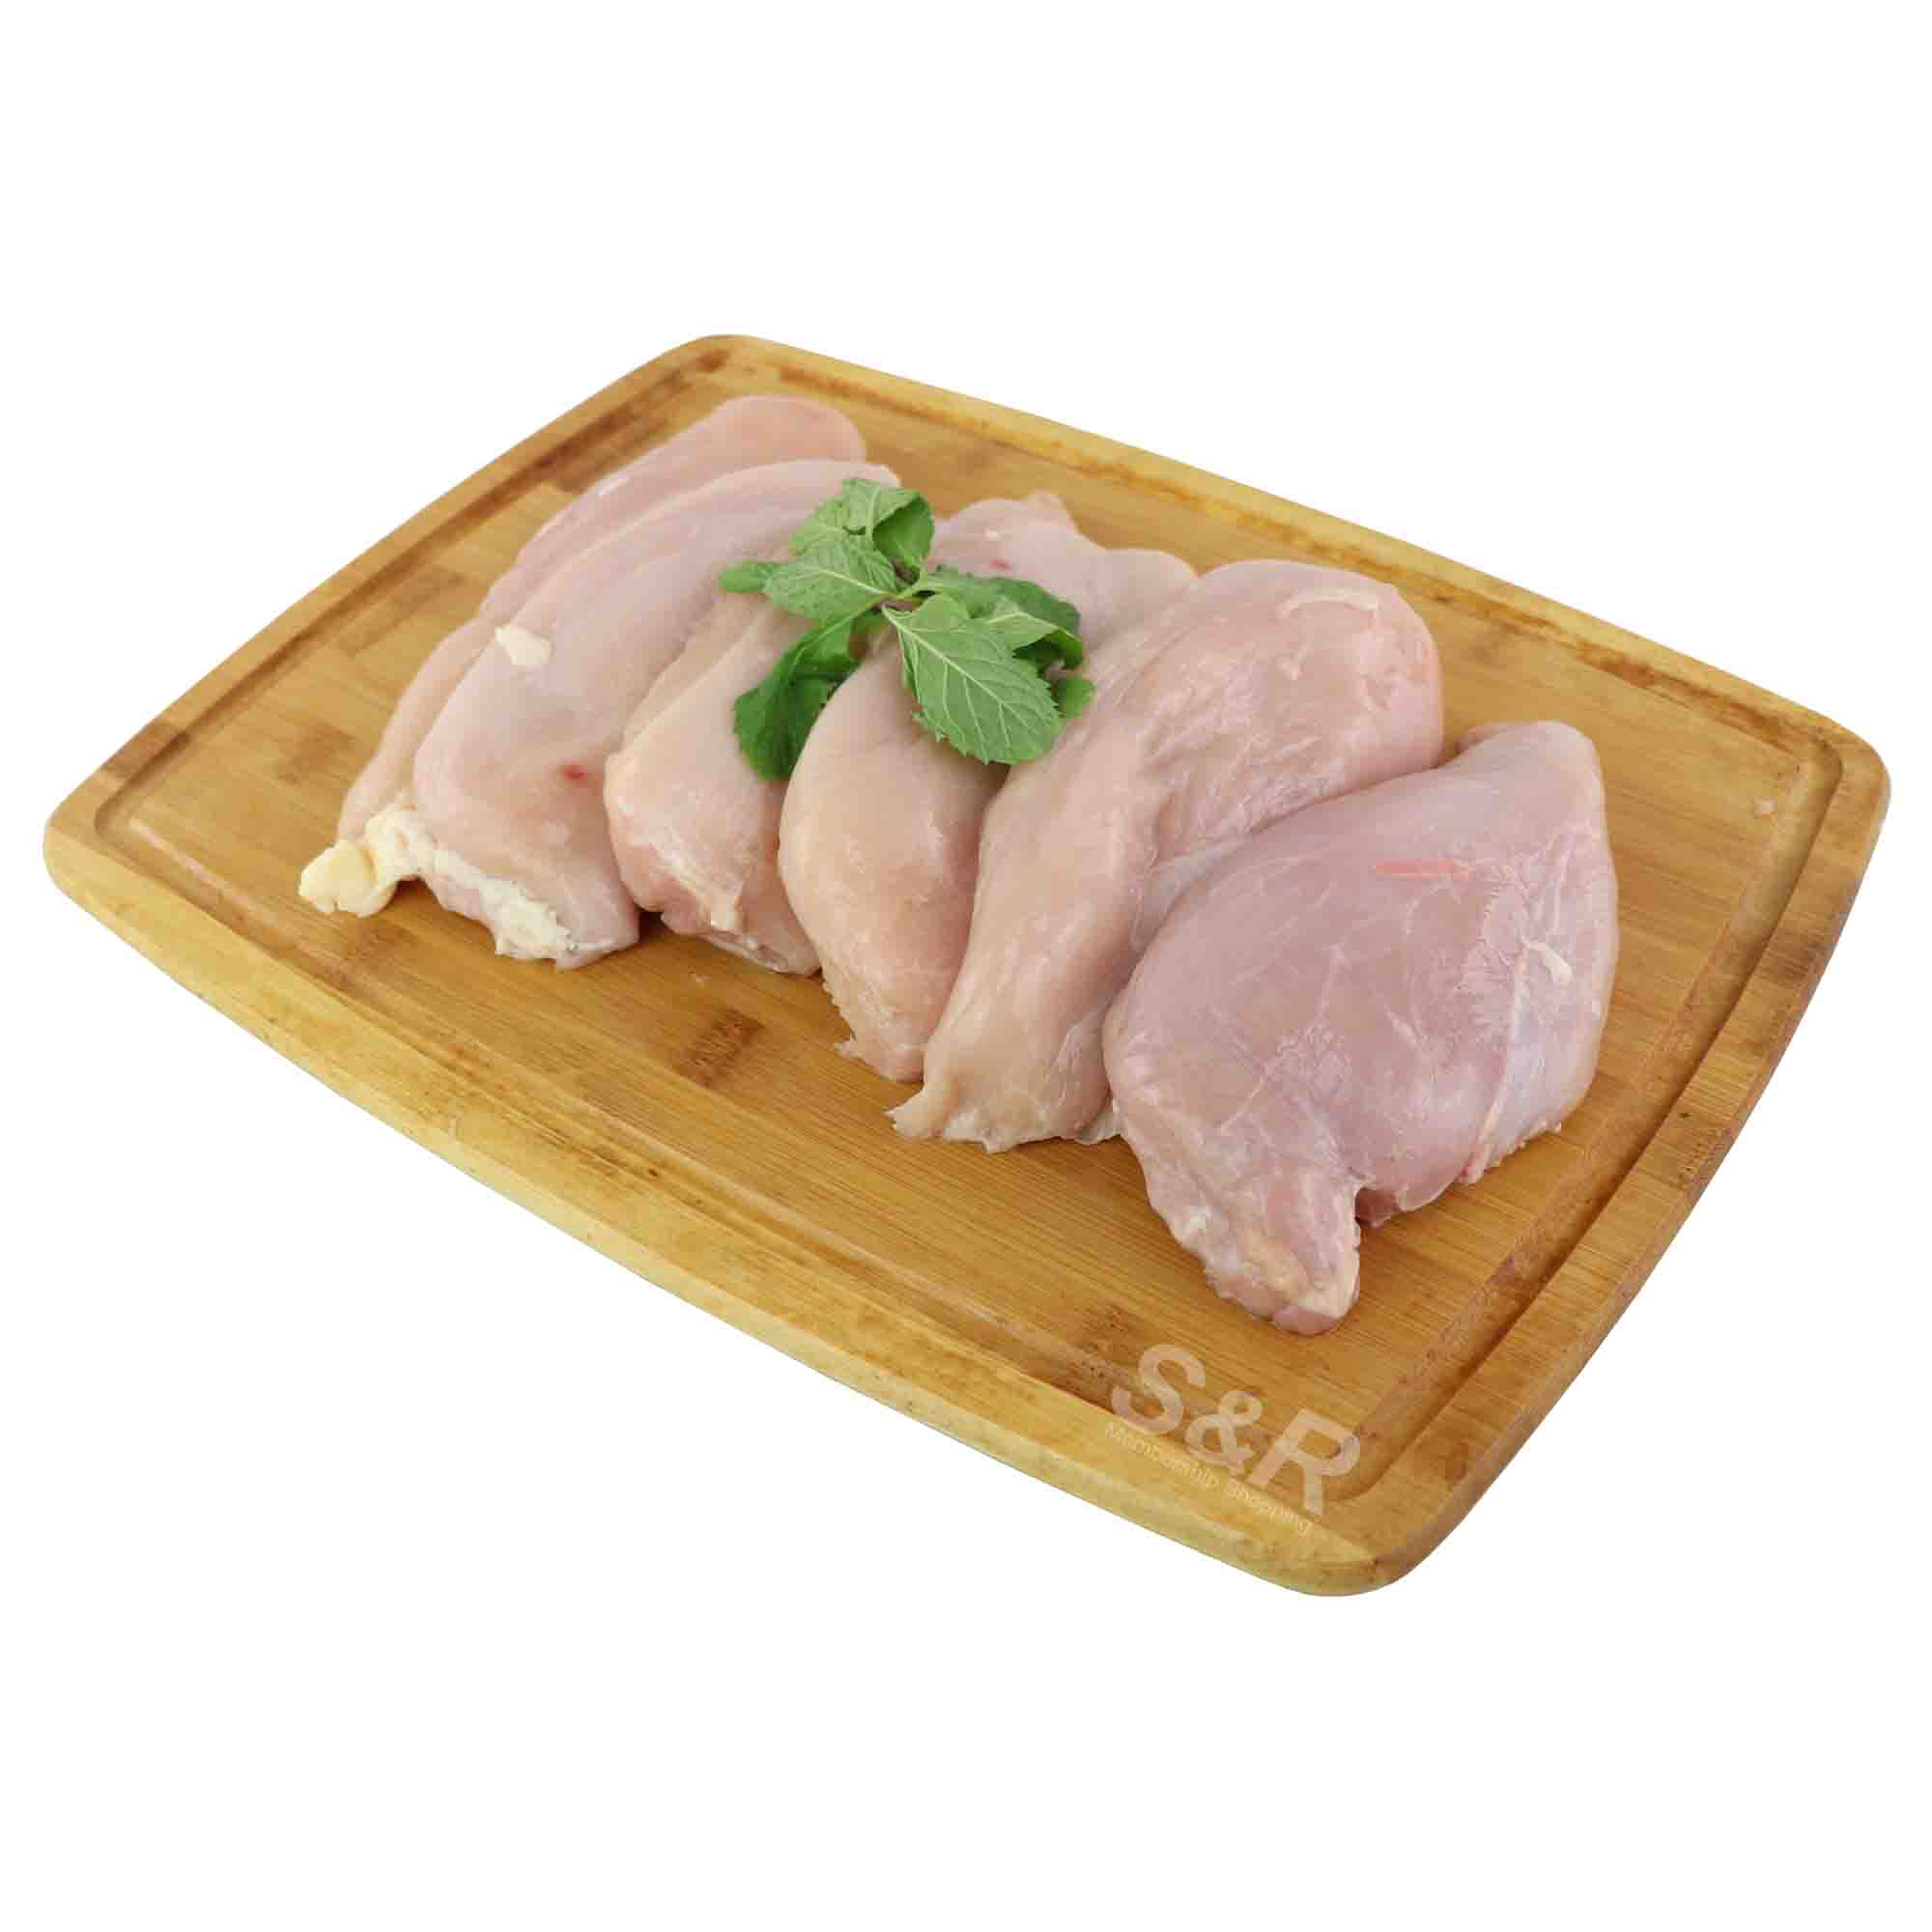 Members' Value Chicken Breast Boneless Skinless approx. 15.1kg